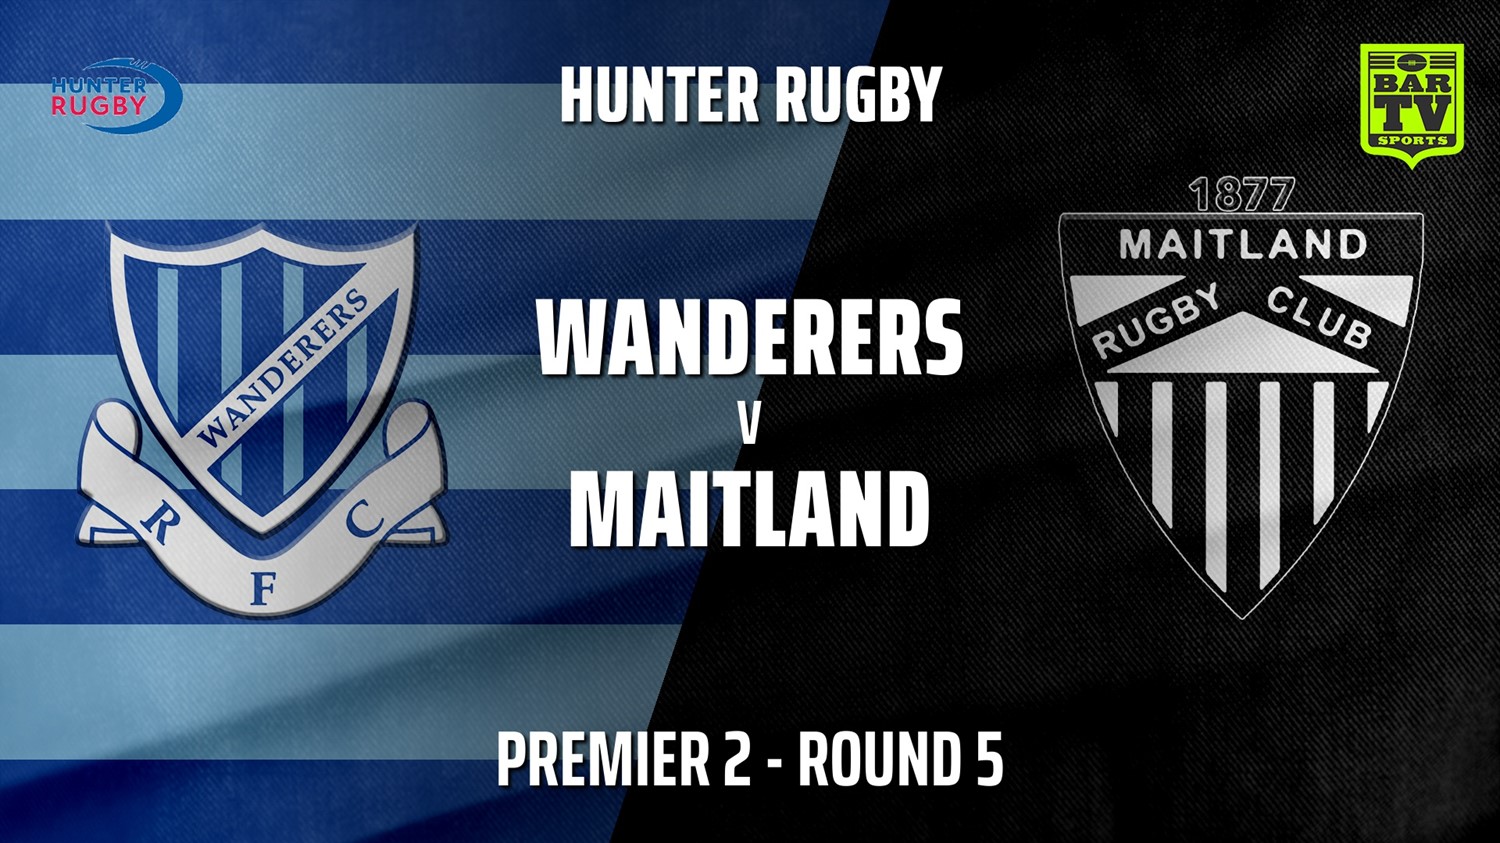 210515-HRU Round 5 - Premier 2 - Wanderers v Maitland Slate Image